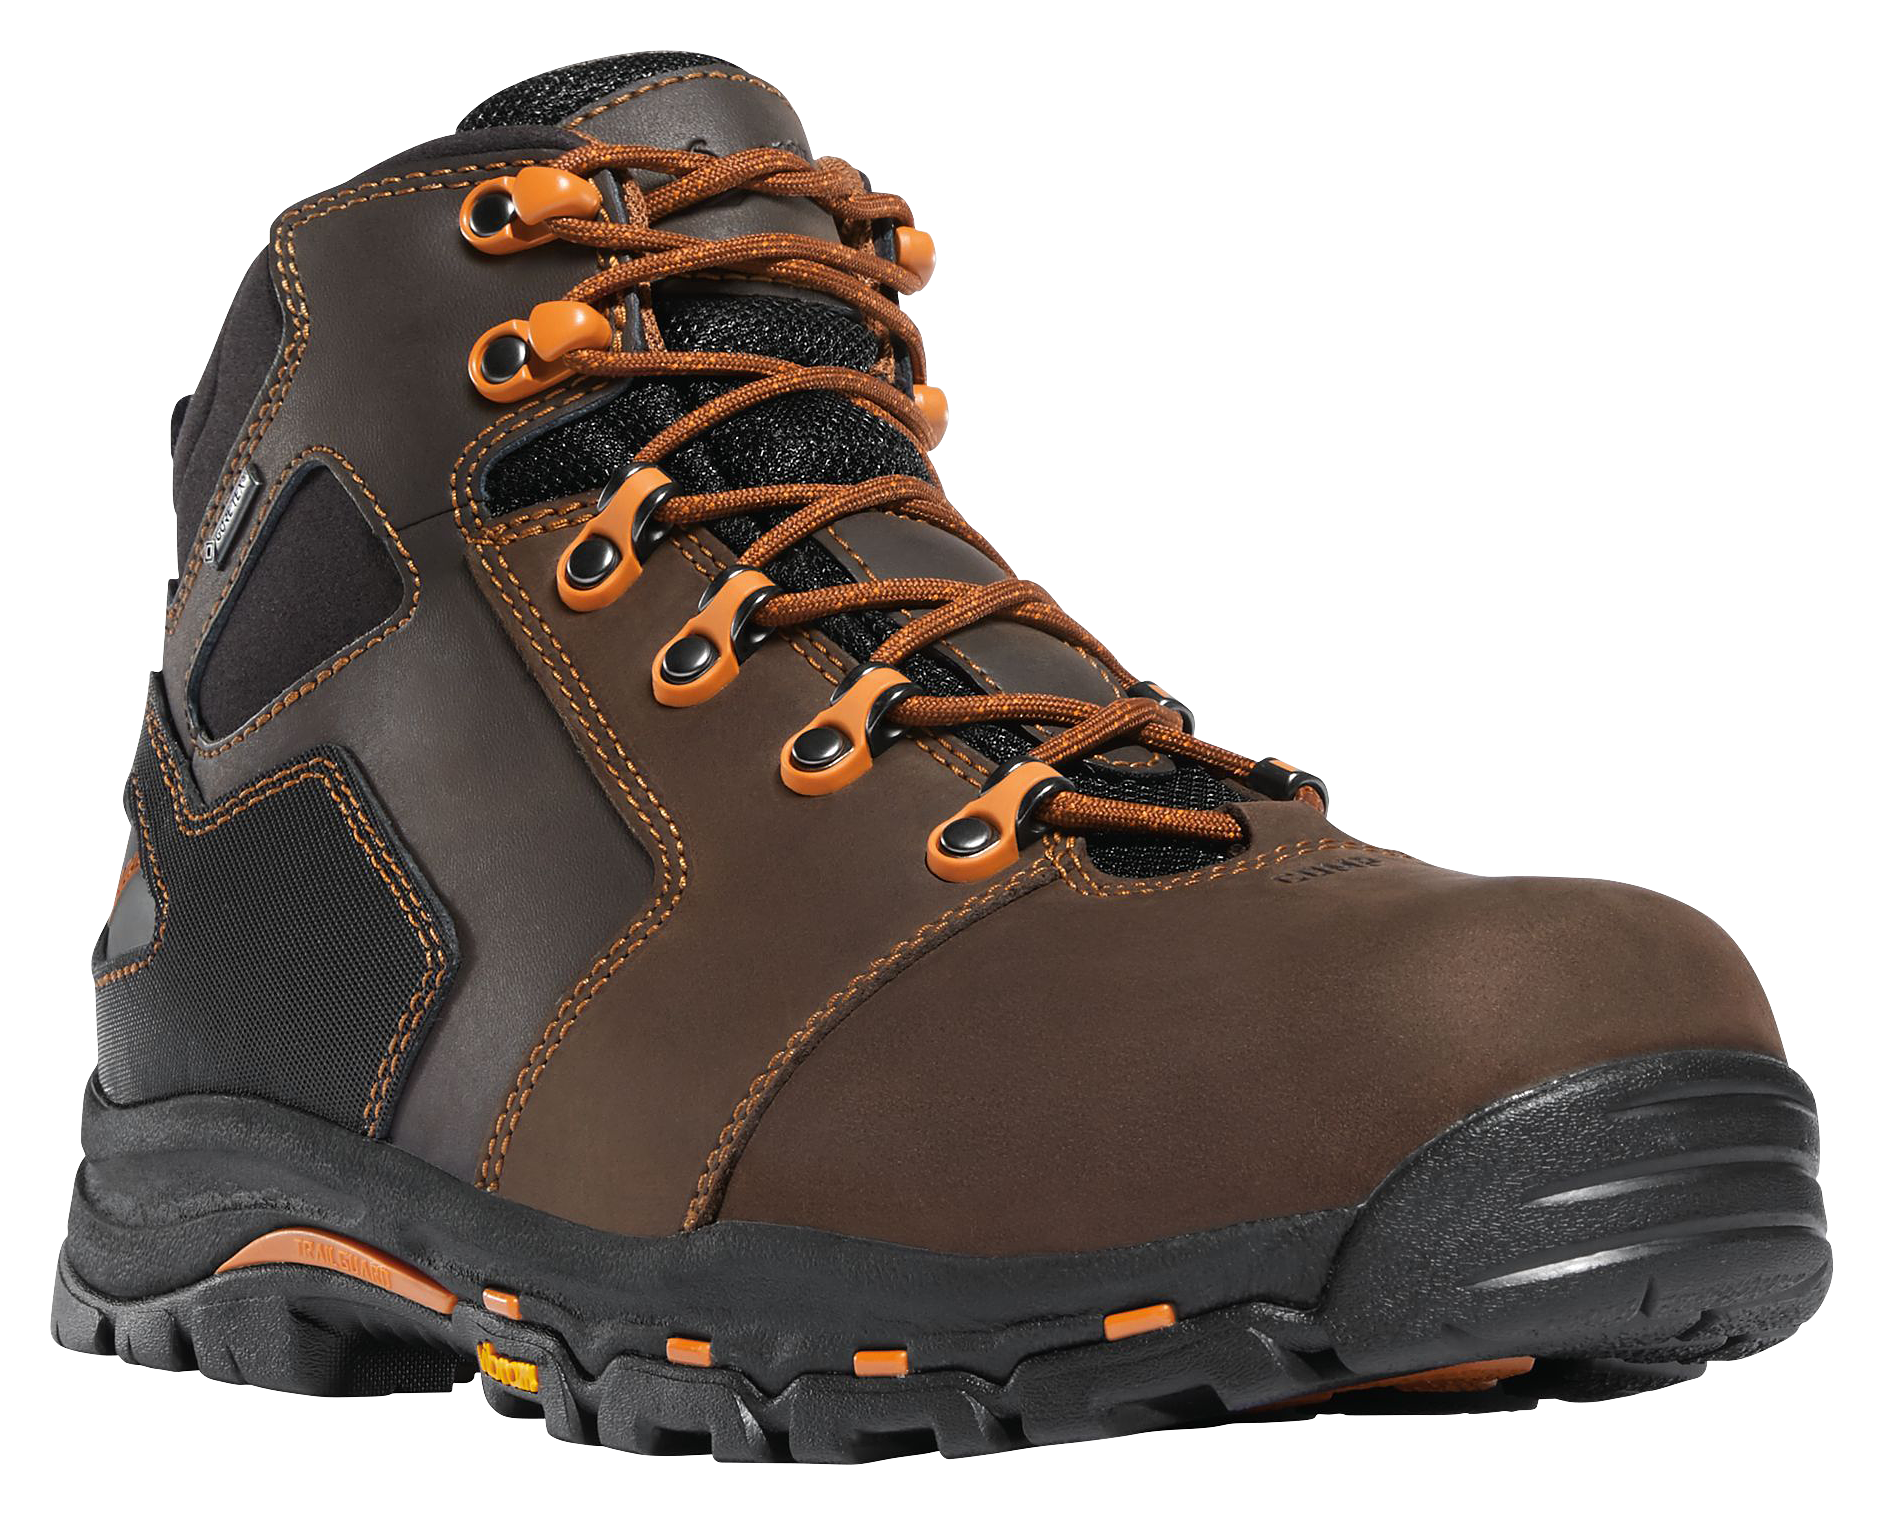 Danner Vicious 4.5'' GORE-TEX EH Work Boots for Men - Brown/Orange - 11W